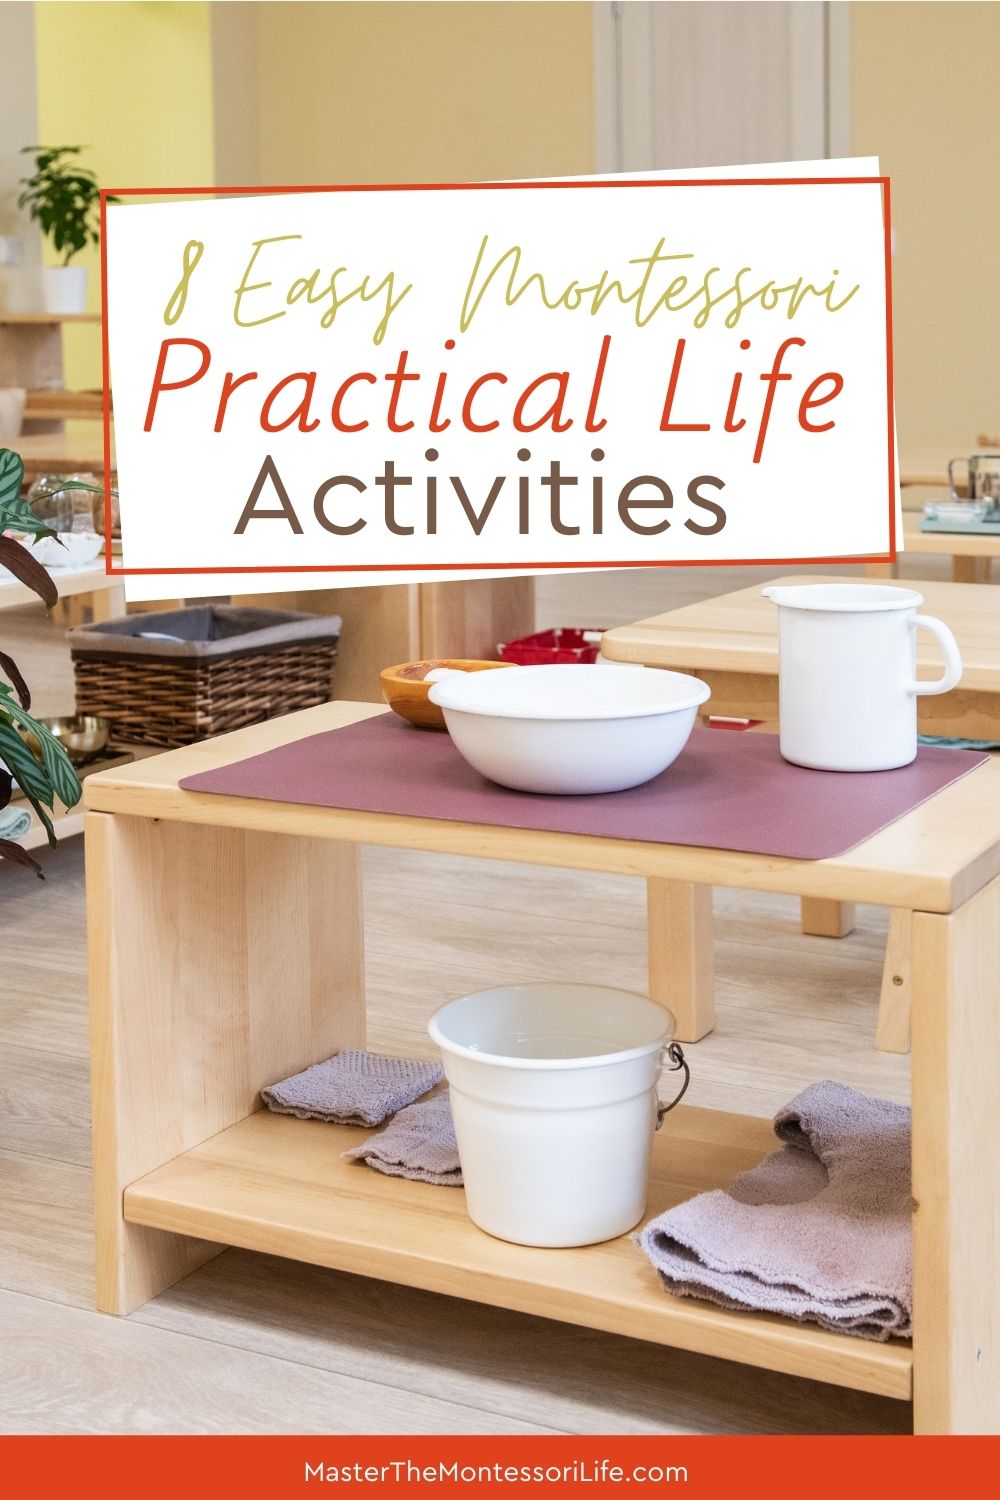 montessori practical life activities